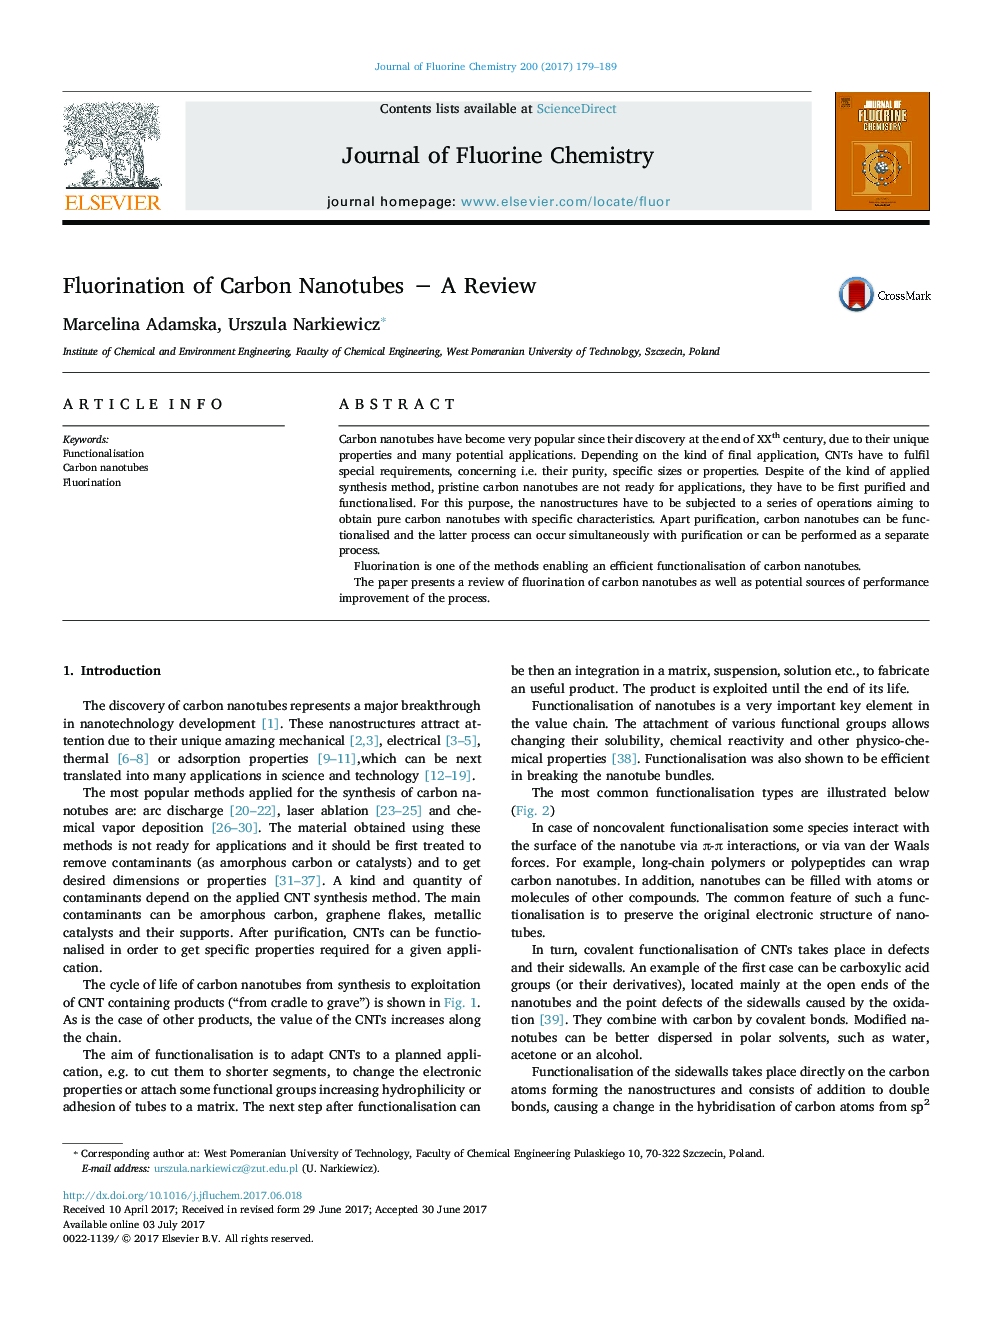 Fluorination of Carbon Nanotubes â A Review